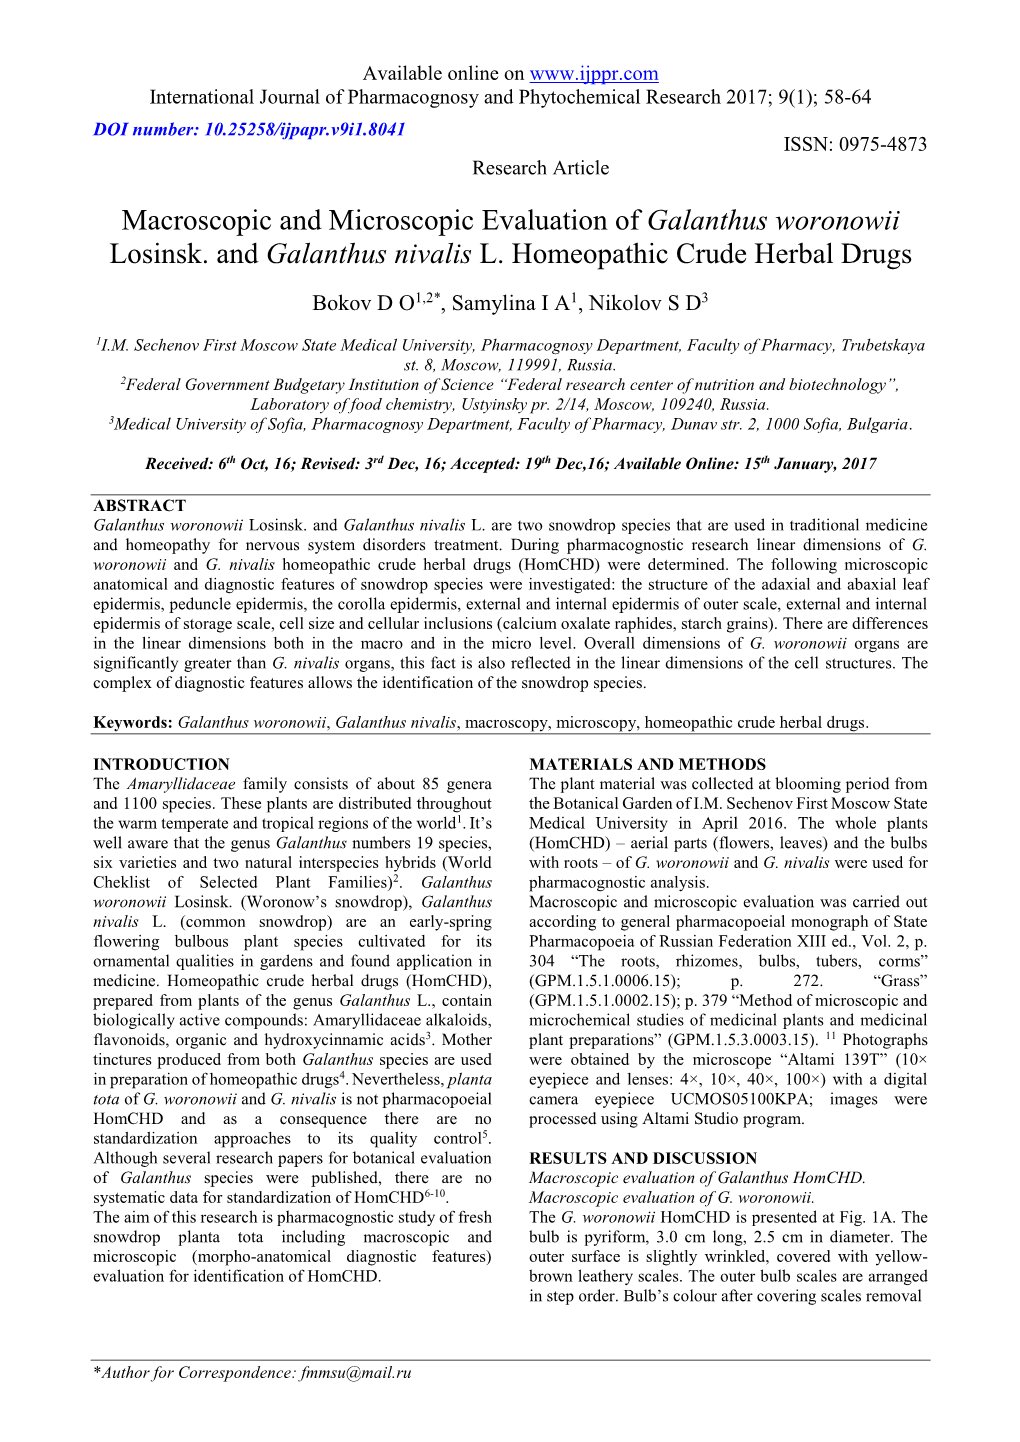 Macroscopic and Microscopic Evaluation of Galanthus Woronowii Losinsk